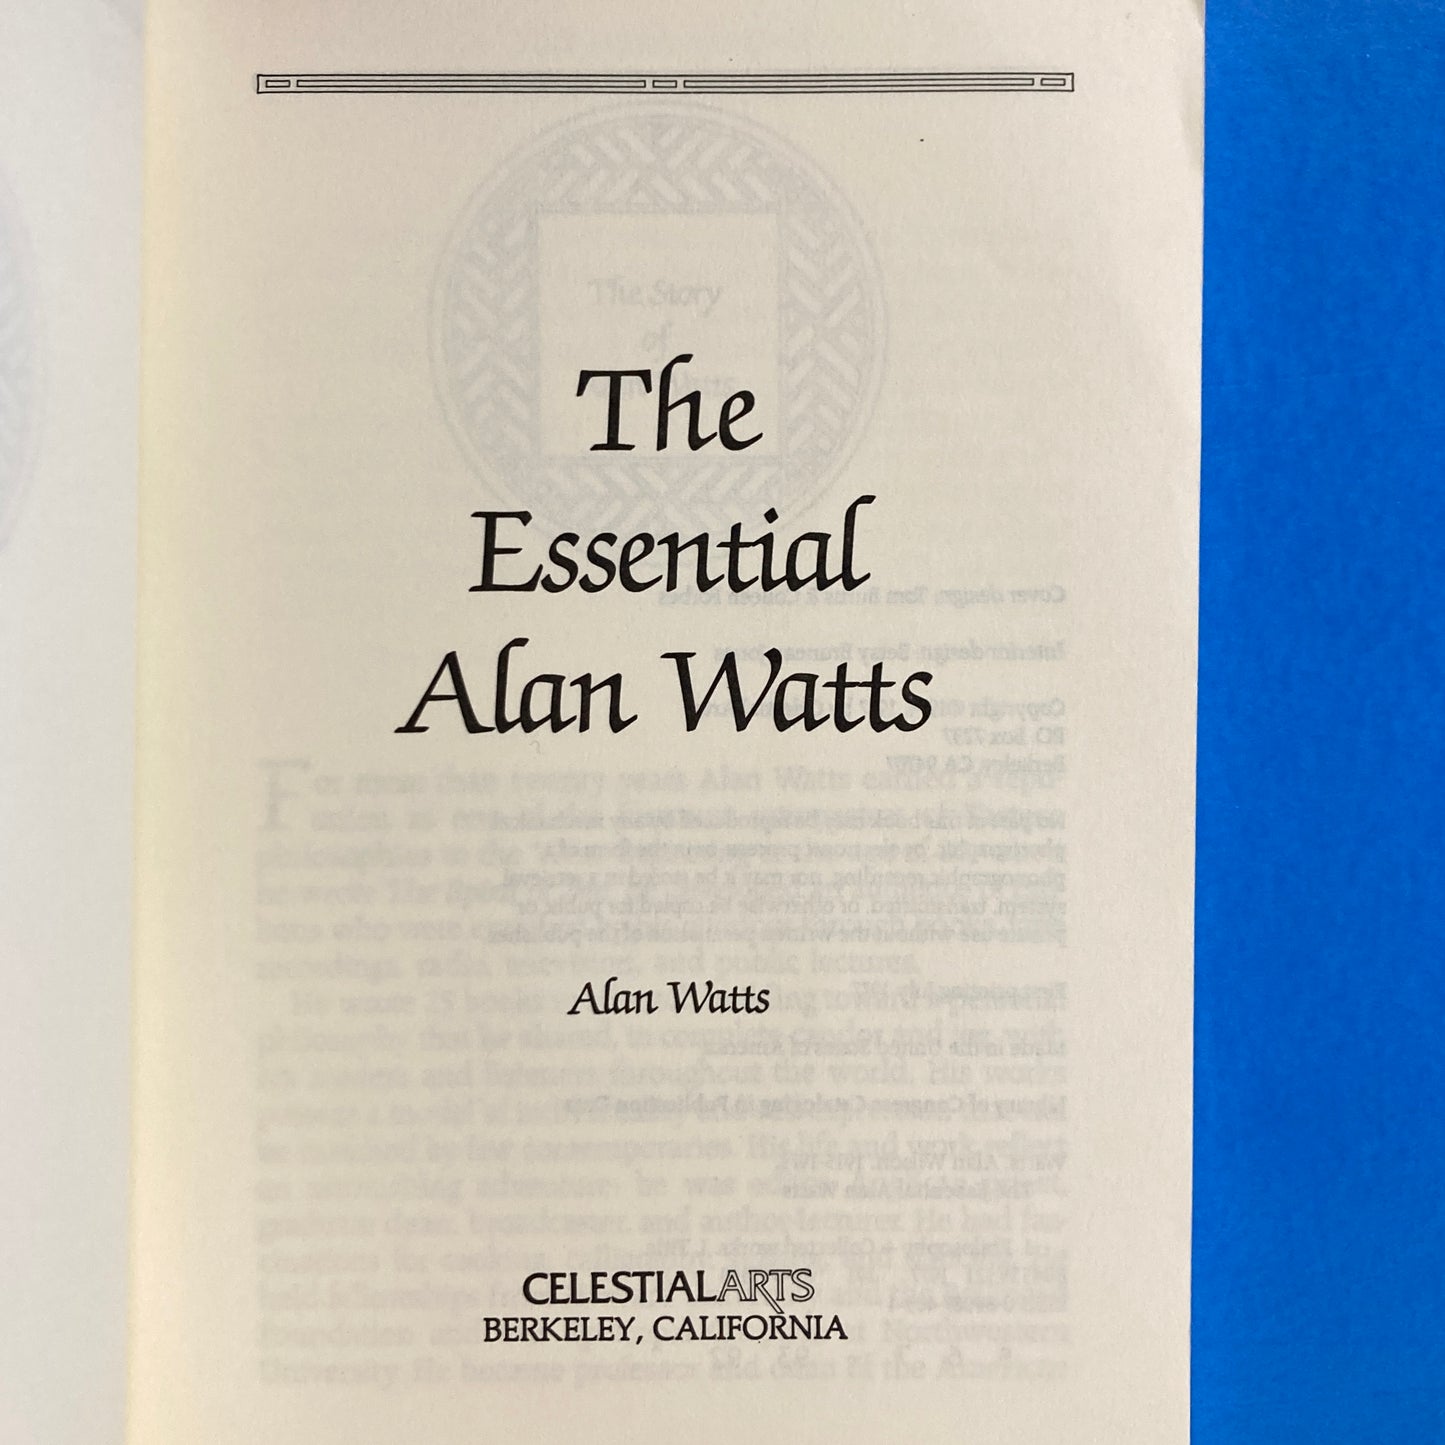 The Essential Alan Watts